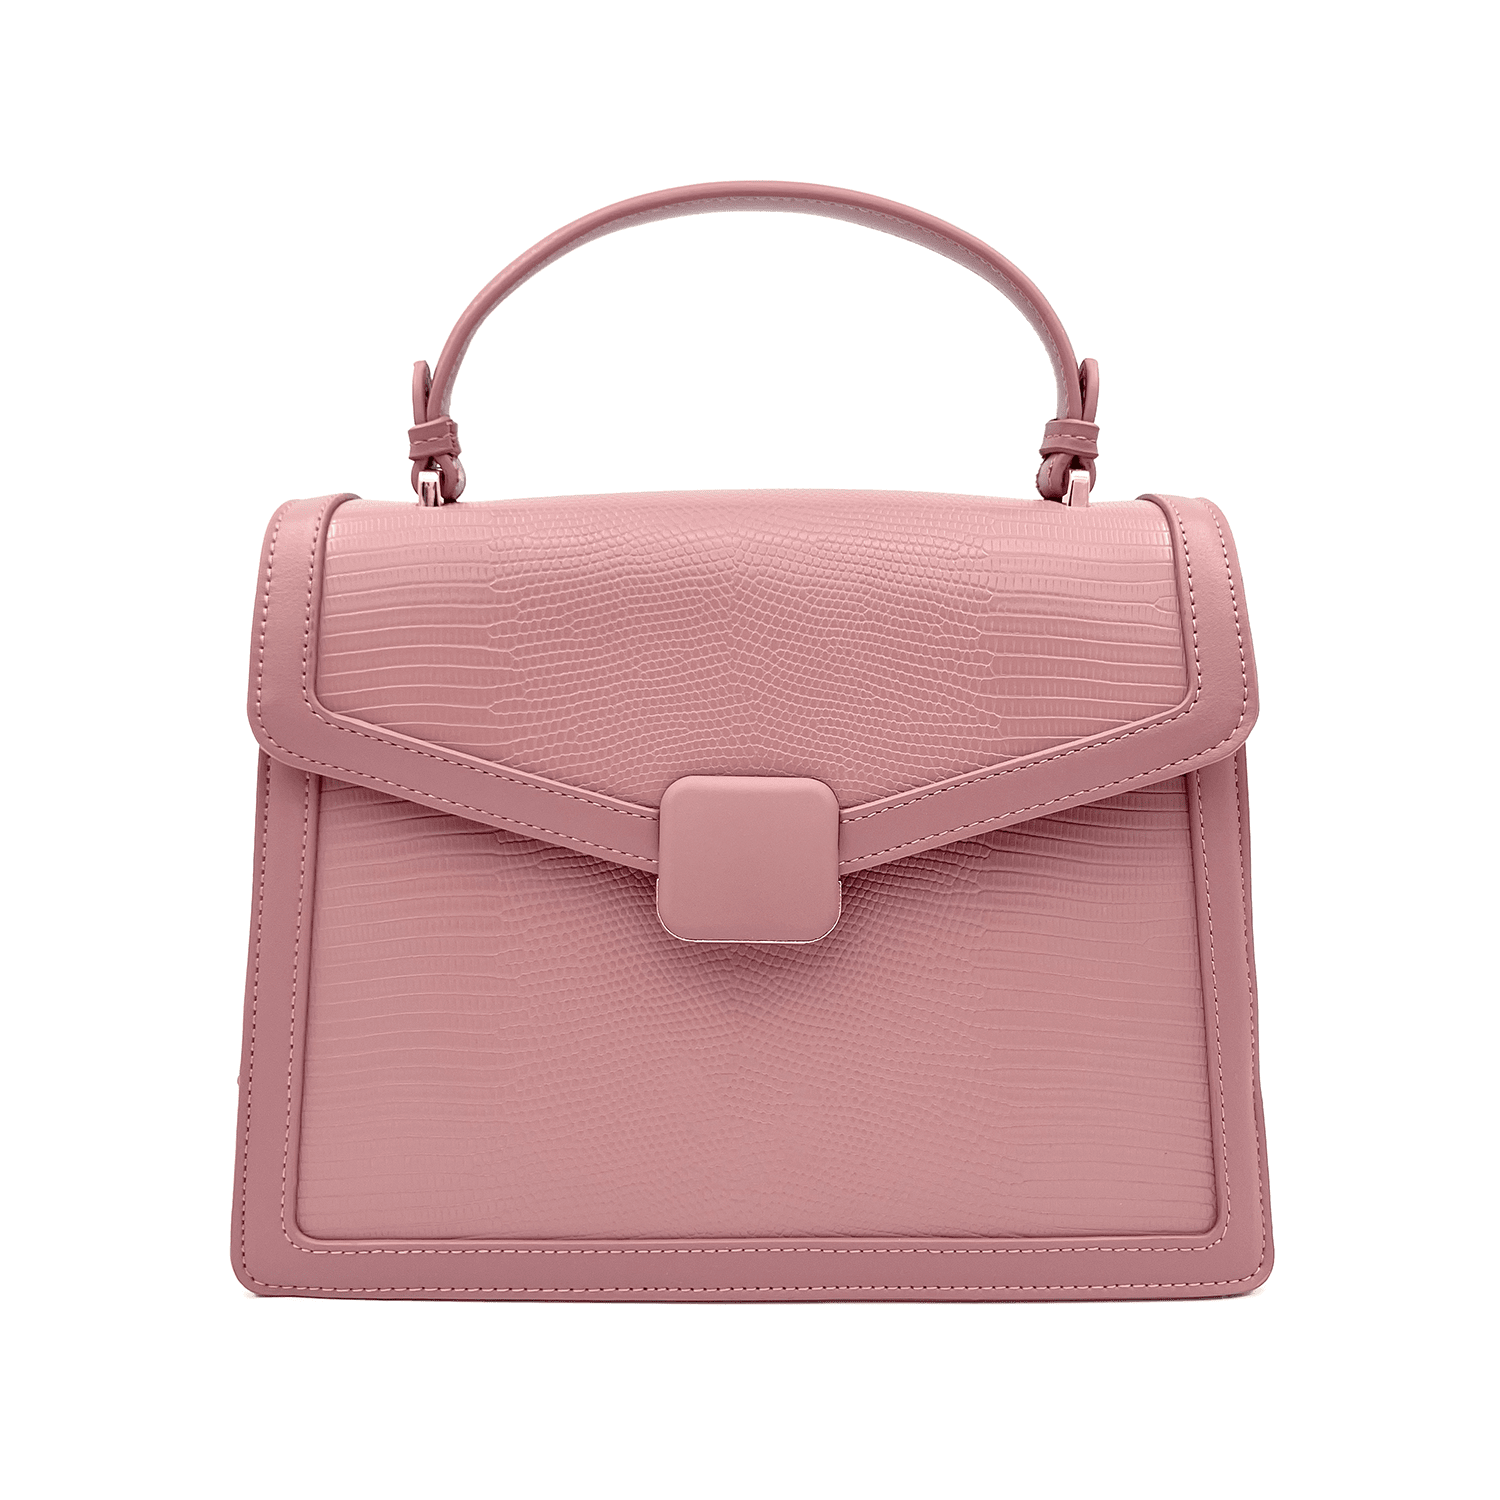 Diana & Co - Луксозна дамска чанта - розова